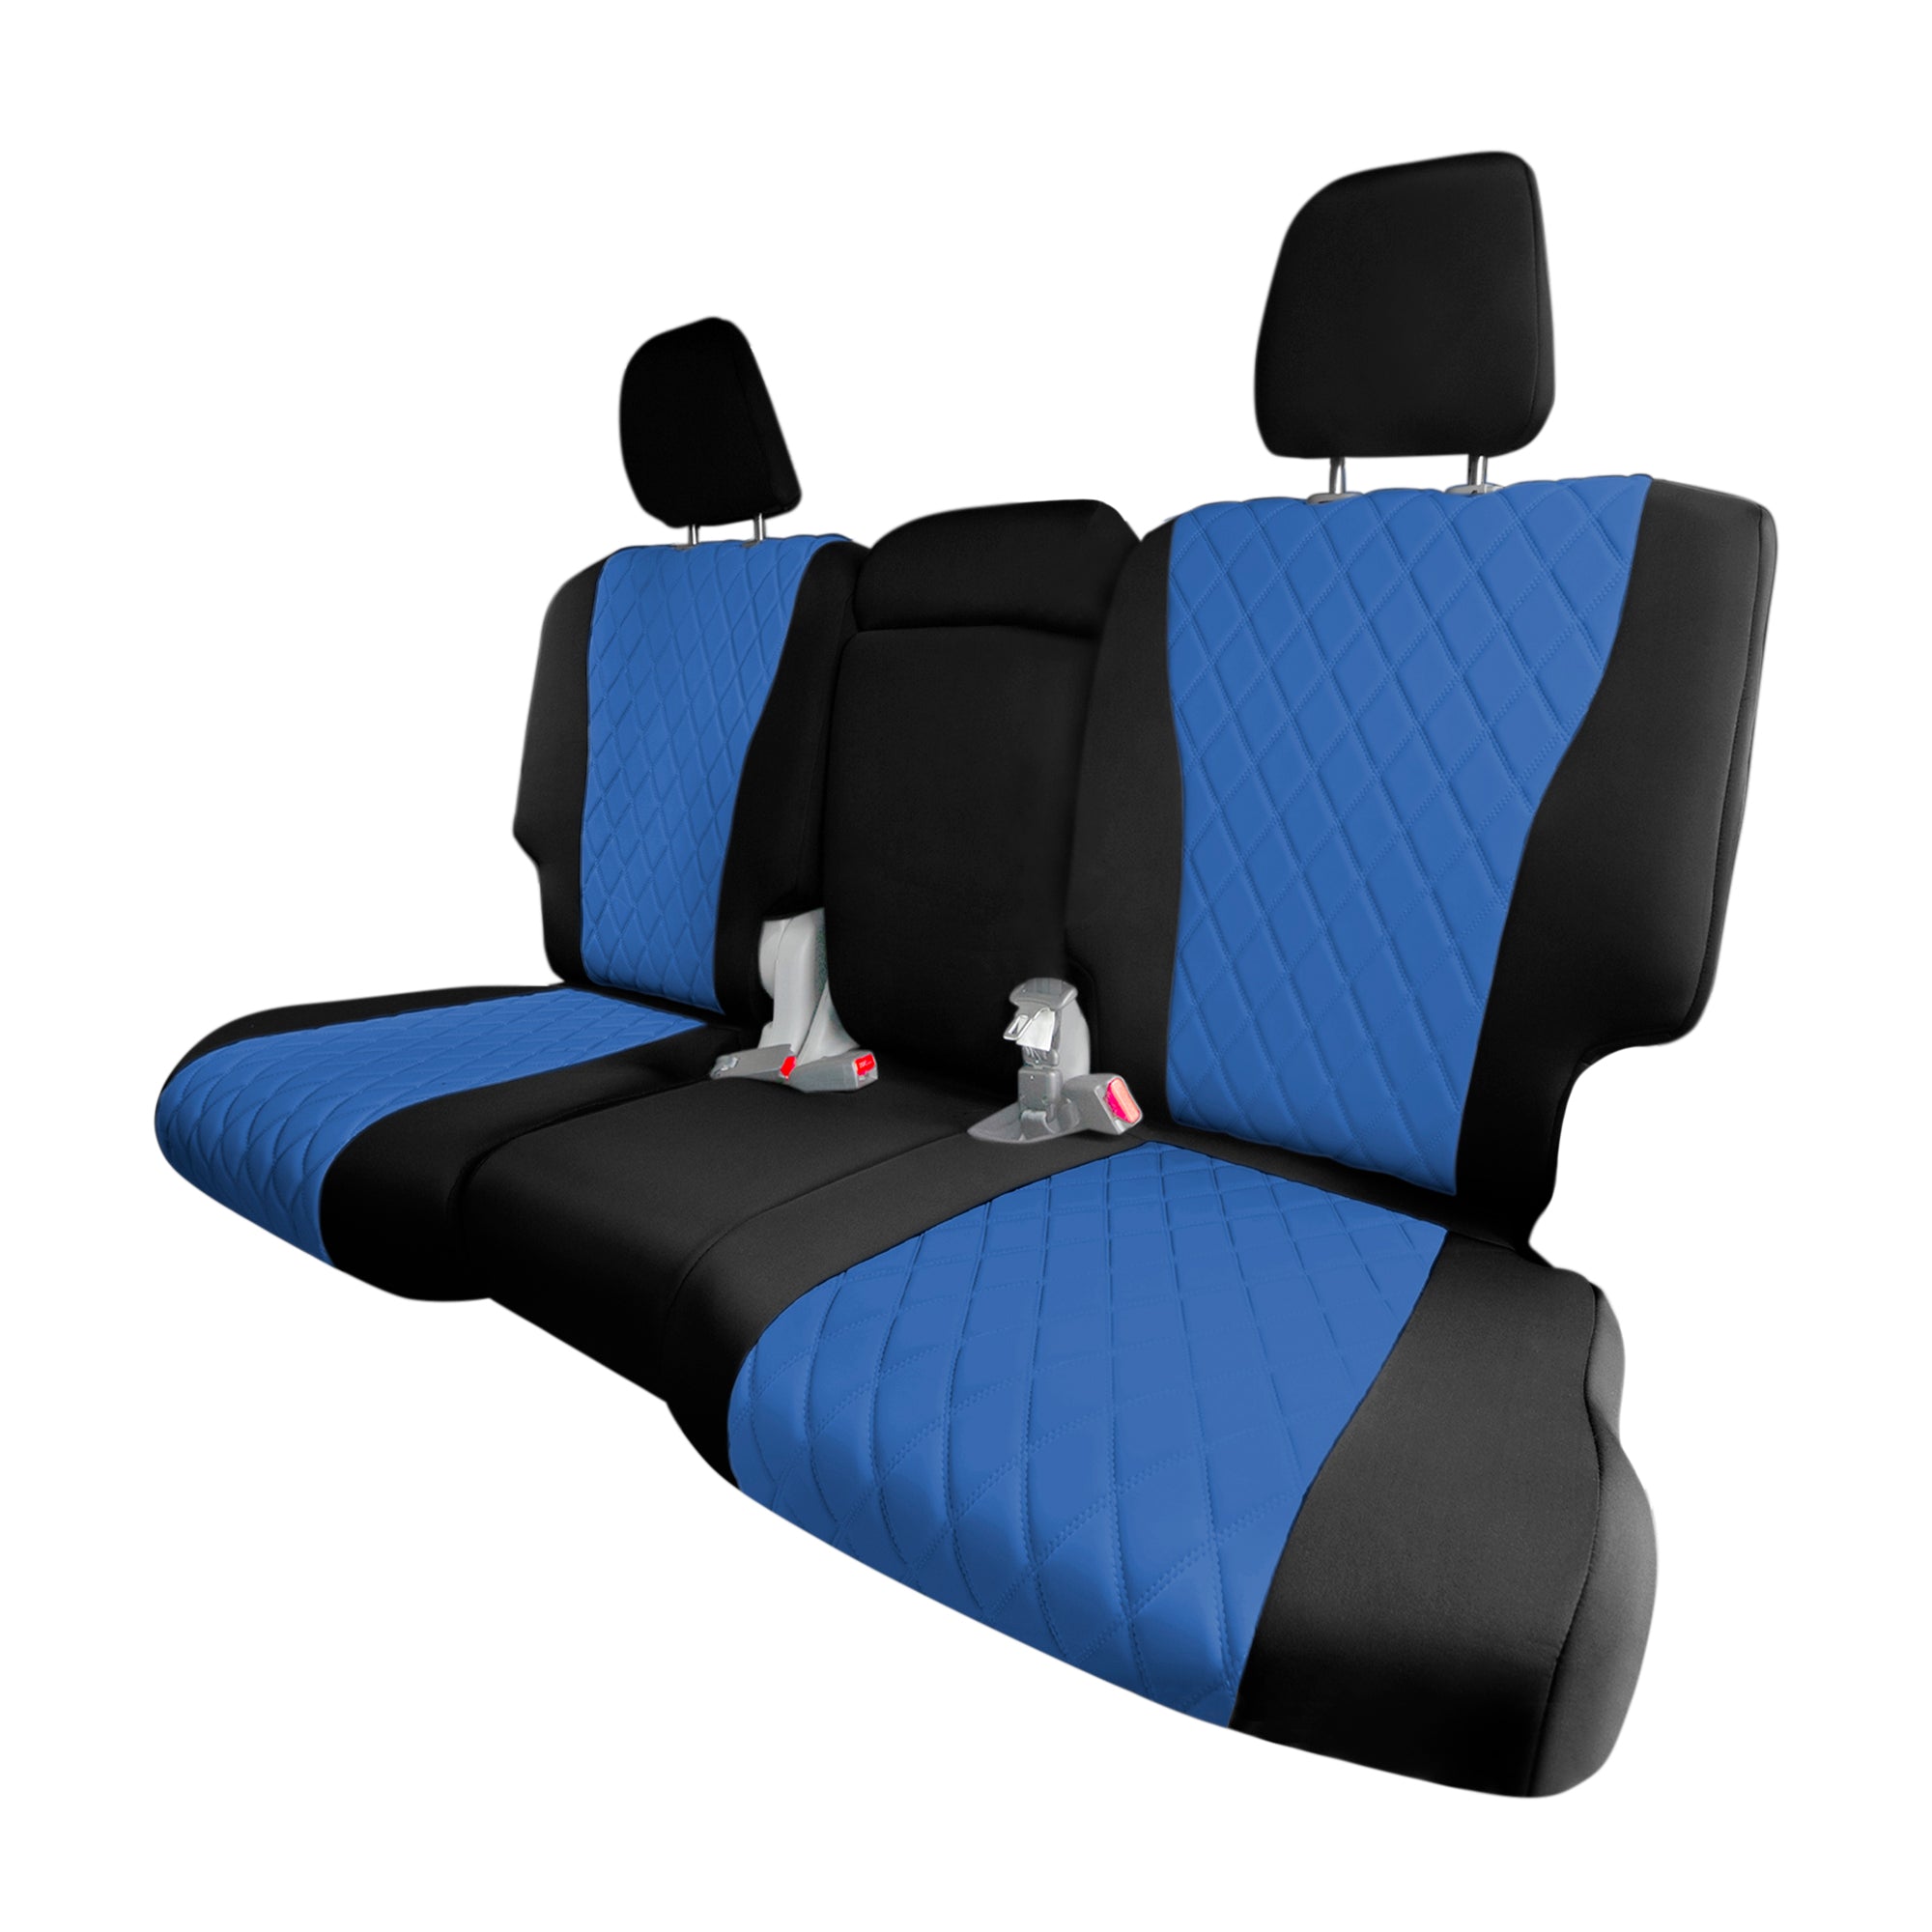 Honda Pilot 2016 - 2022 - 2nd Row Seat Covers - Blue Ultraflex Neoprene